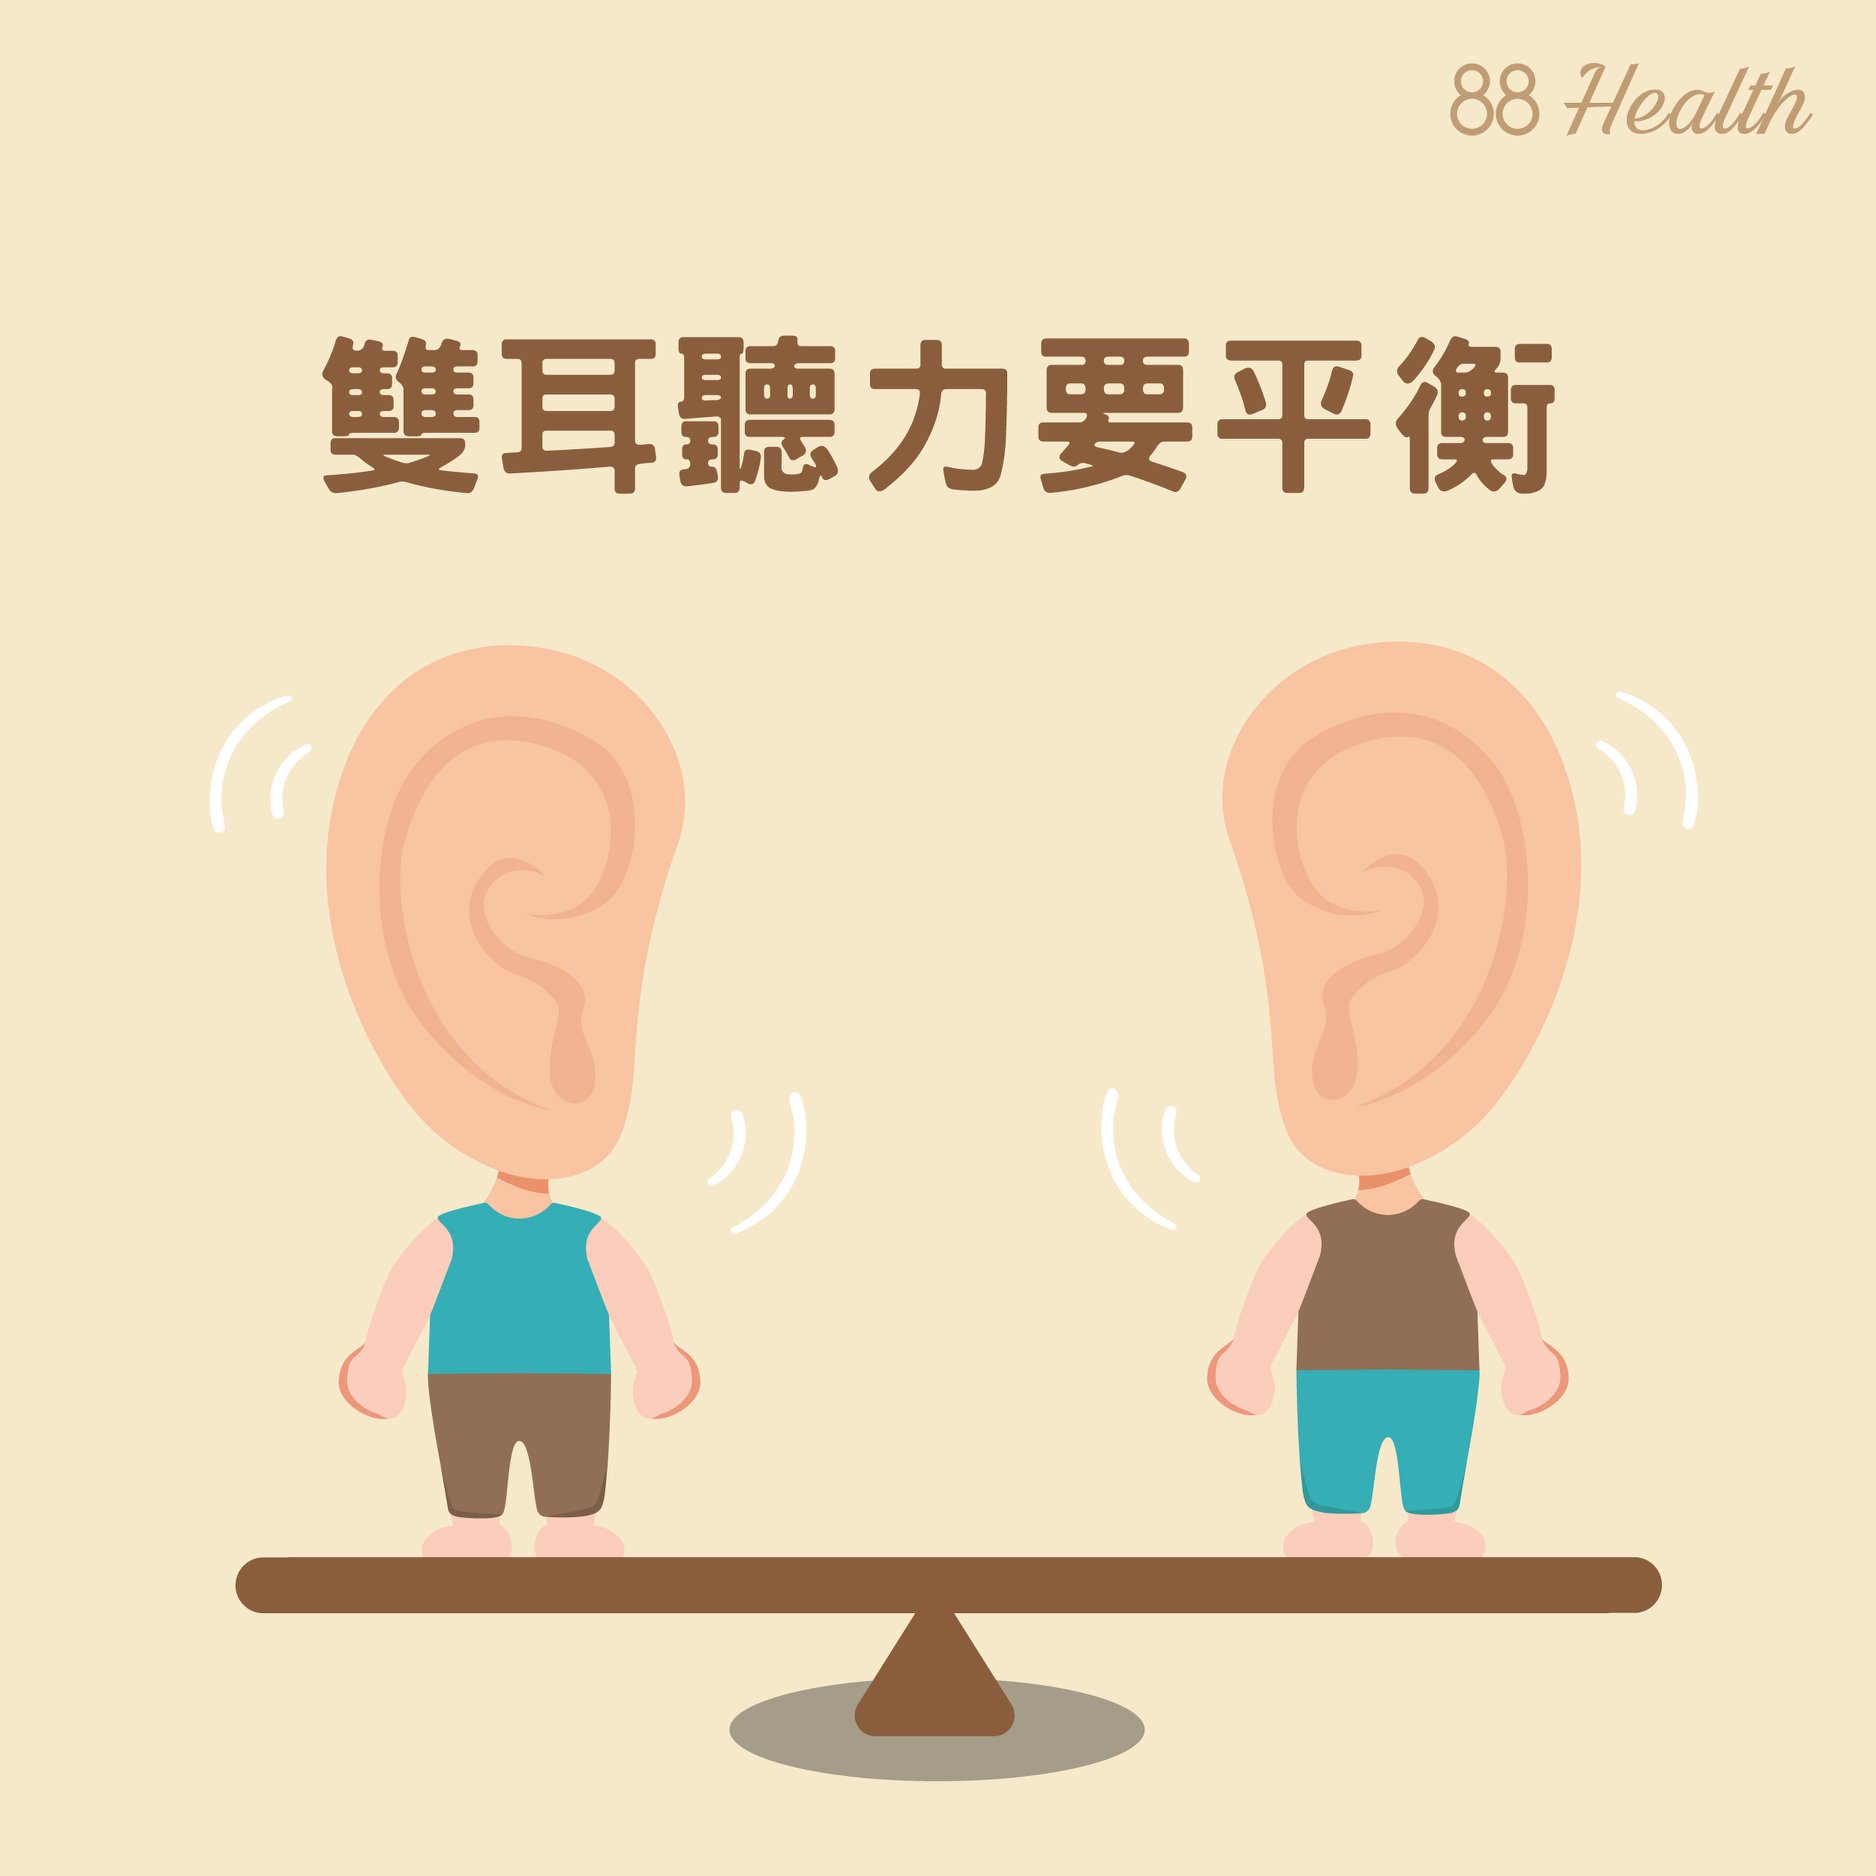 【Two is better than one 雙耳聽力要平衡🤸‍♀️！】 當兩隻耳仔聽力都下降，千祁唔好只係為一邊耳仔配戴助聽器！因為另一邊耳仔嘅聽覺中樞對言語嘅分辨能力係會逐漸變差㗎👂⬇ 呢個亦都稱之為「聽覺剝奪」。另外，人嘅耳仔係有聲源定位能力，只依靠一隻耳仔聽嘢係難以準確判斷發出聲音嘅方向，好易失去方向感㗎！ 反之而言，雙耳聽力平衡能夠提高對言語嘅理解能力👍。而通過聽到聲音嚟刺激雙耳嘅聽覺系統 👂👂，仲可以減慢系統功能衰退添！... 擔心自己有聽力下降問題？